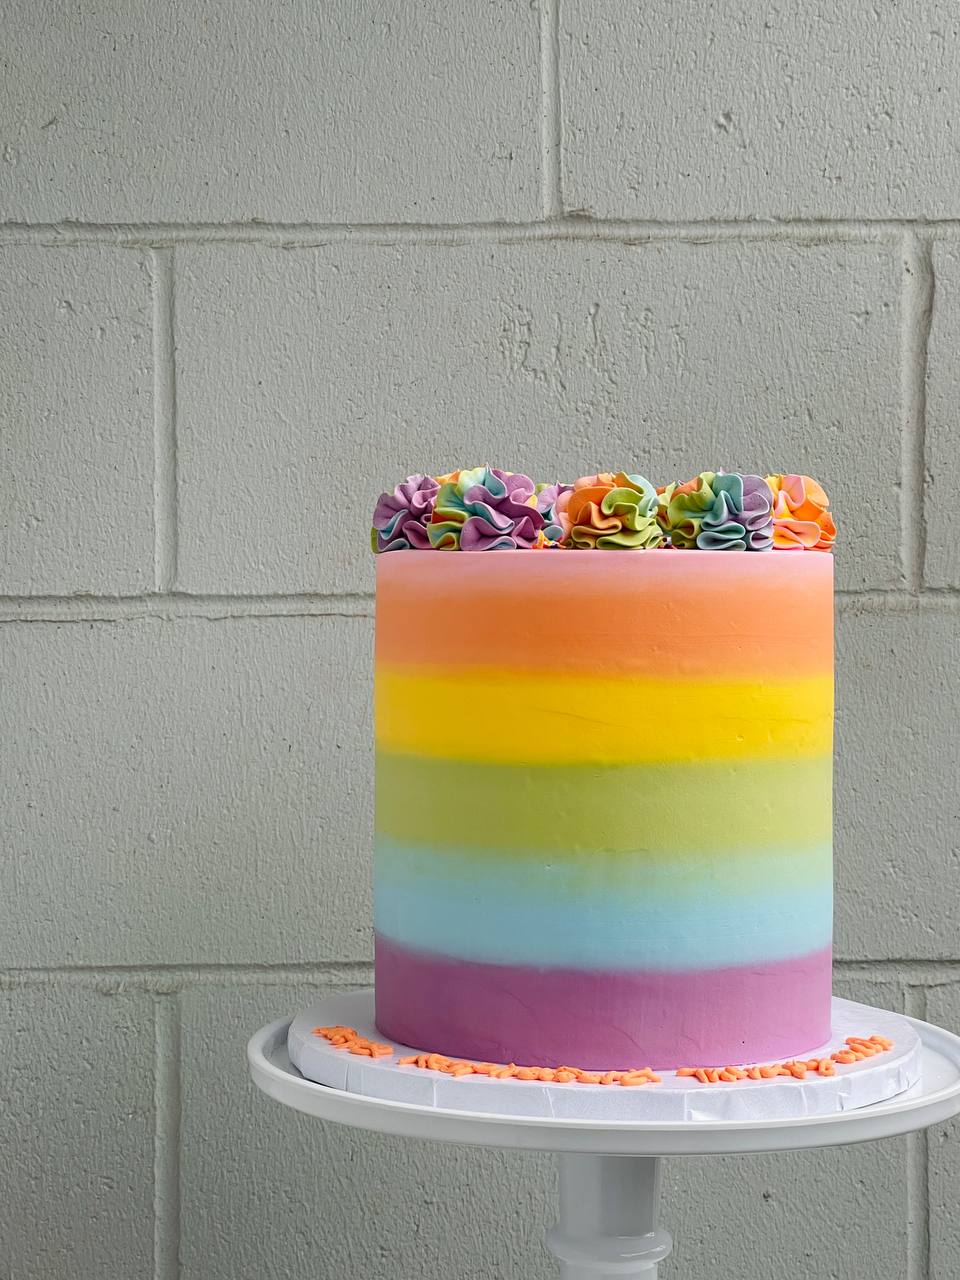 The Rainbow cake